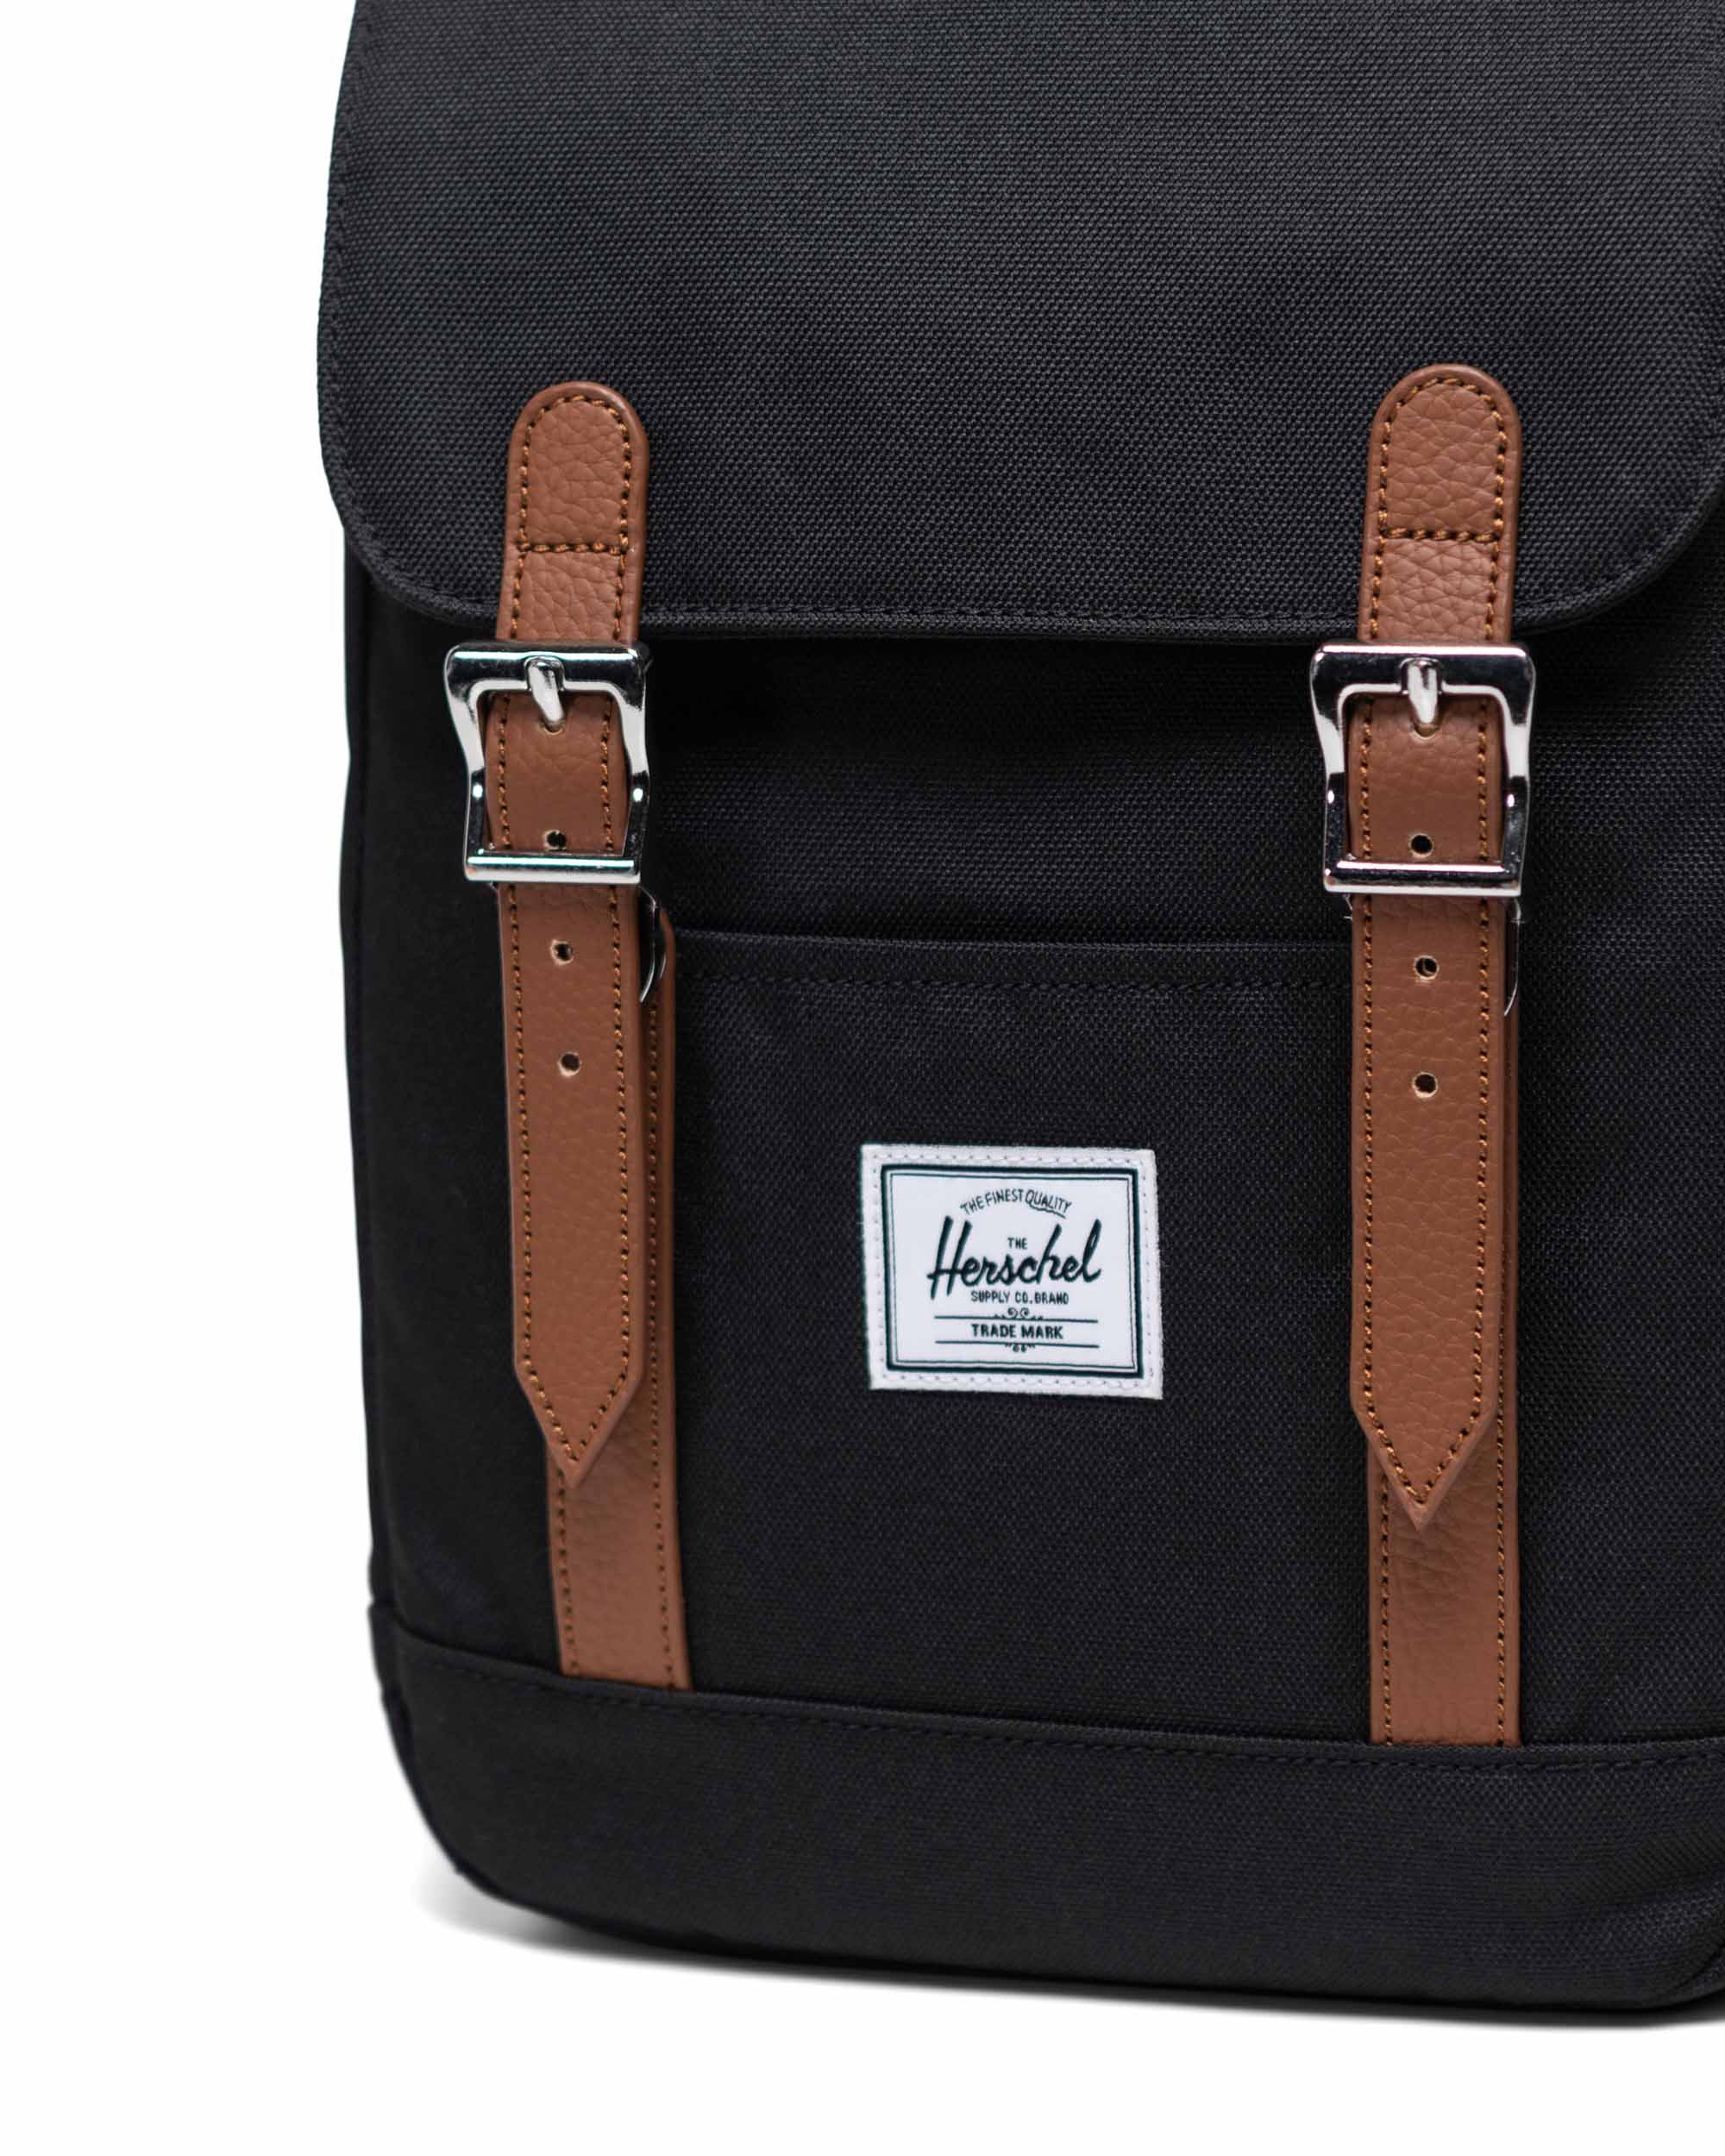 Retreat Backpack Mini 10L | Herschel Supply Co.